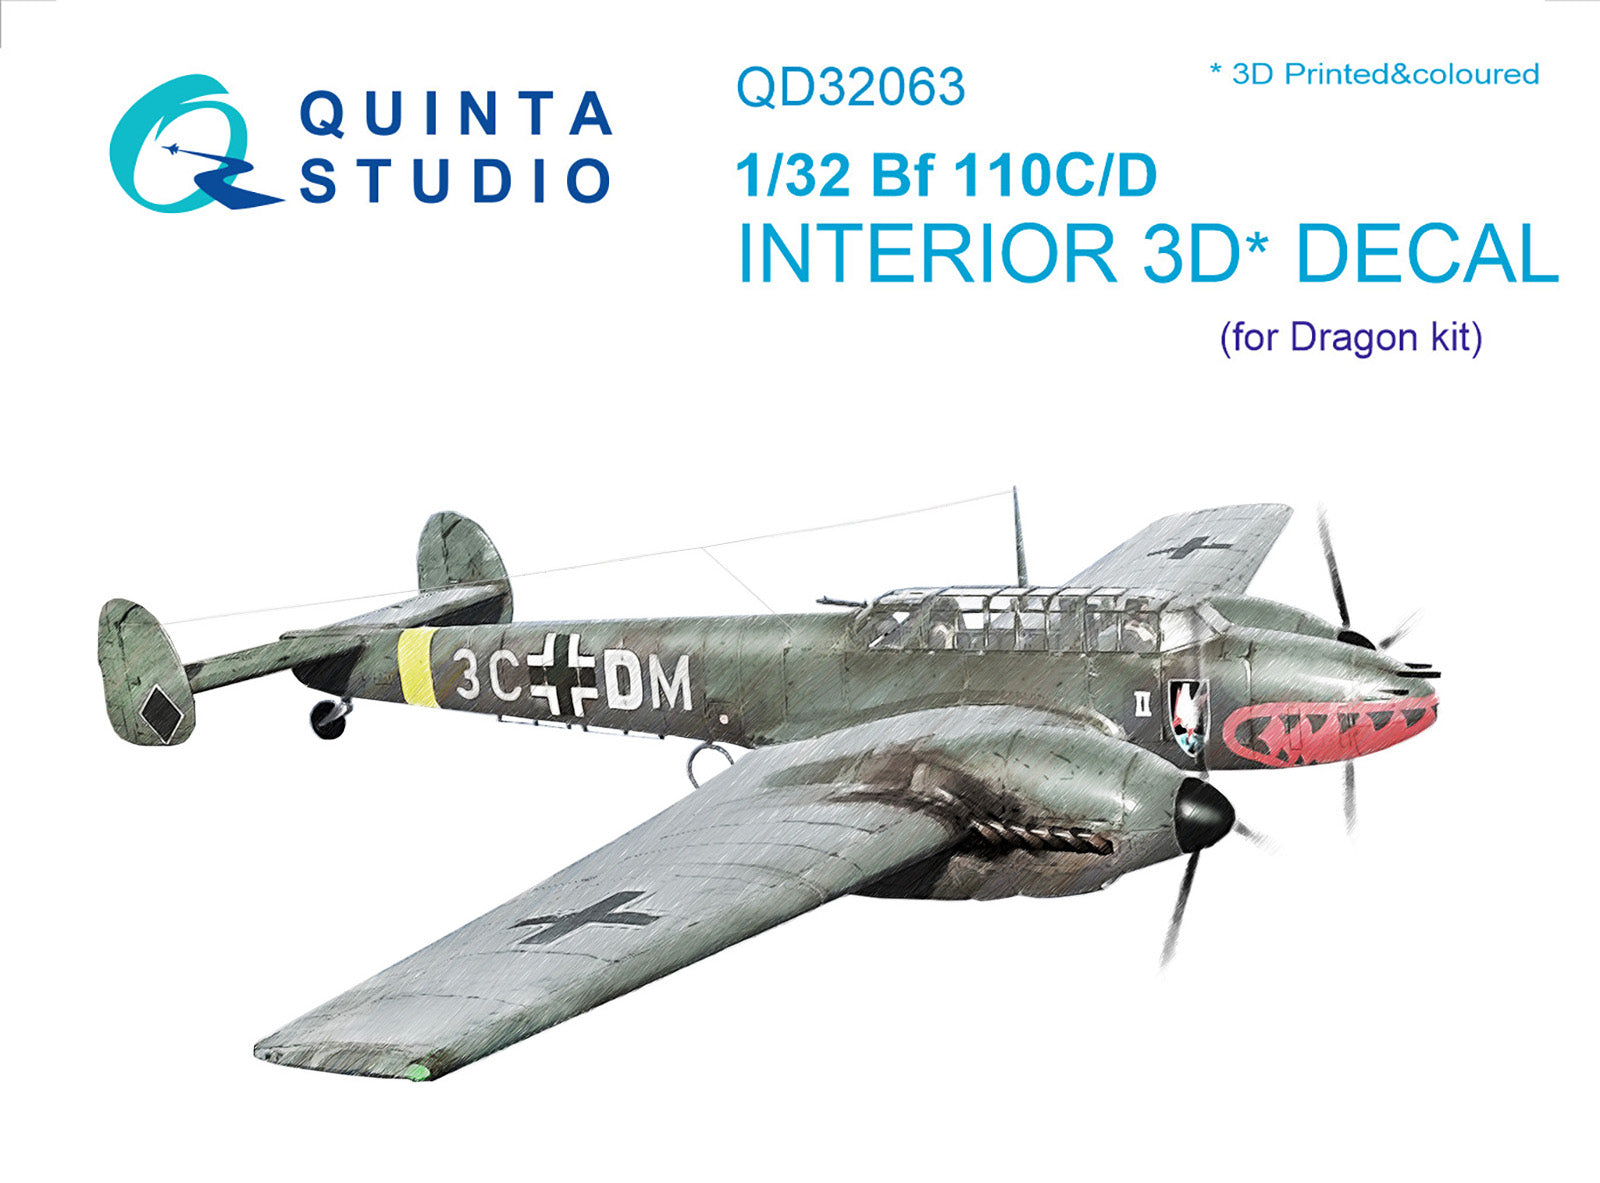 Quinta Studio - 1/32 Bf 110C/D QD32063 for Dragon kit